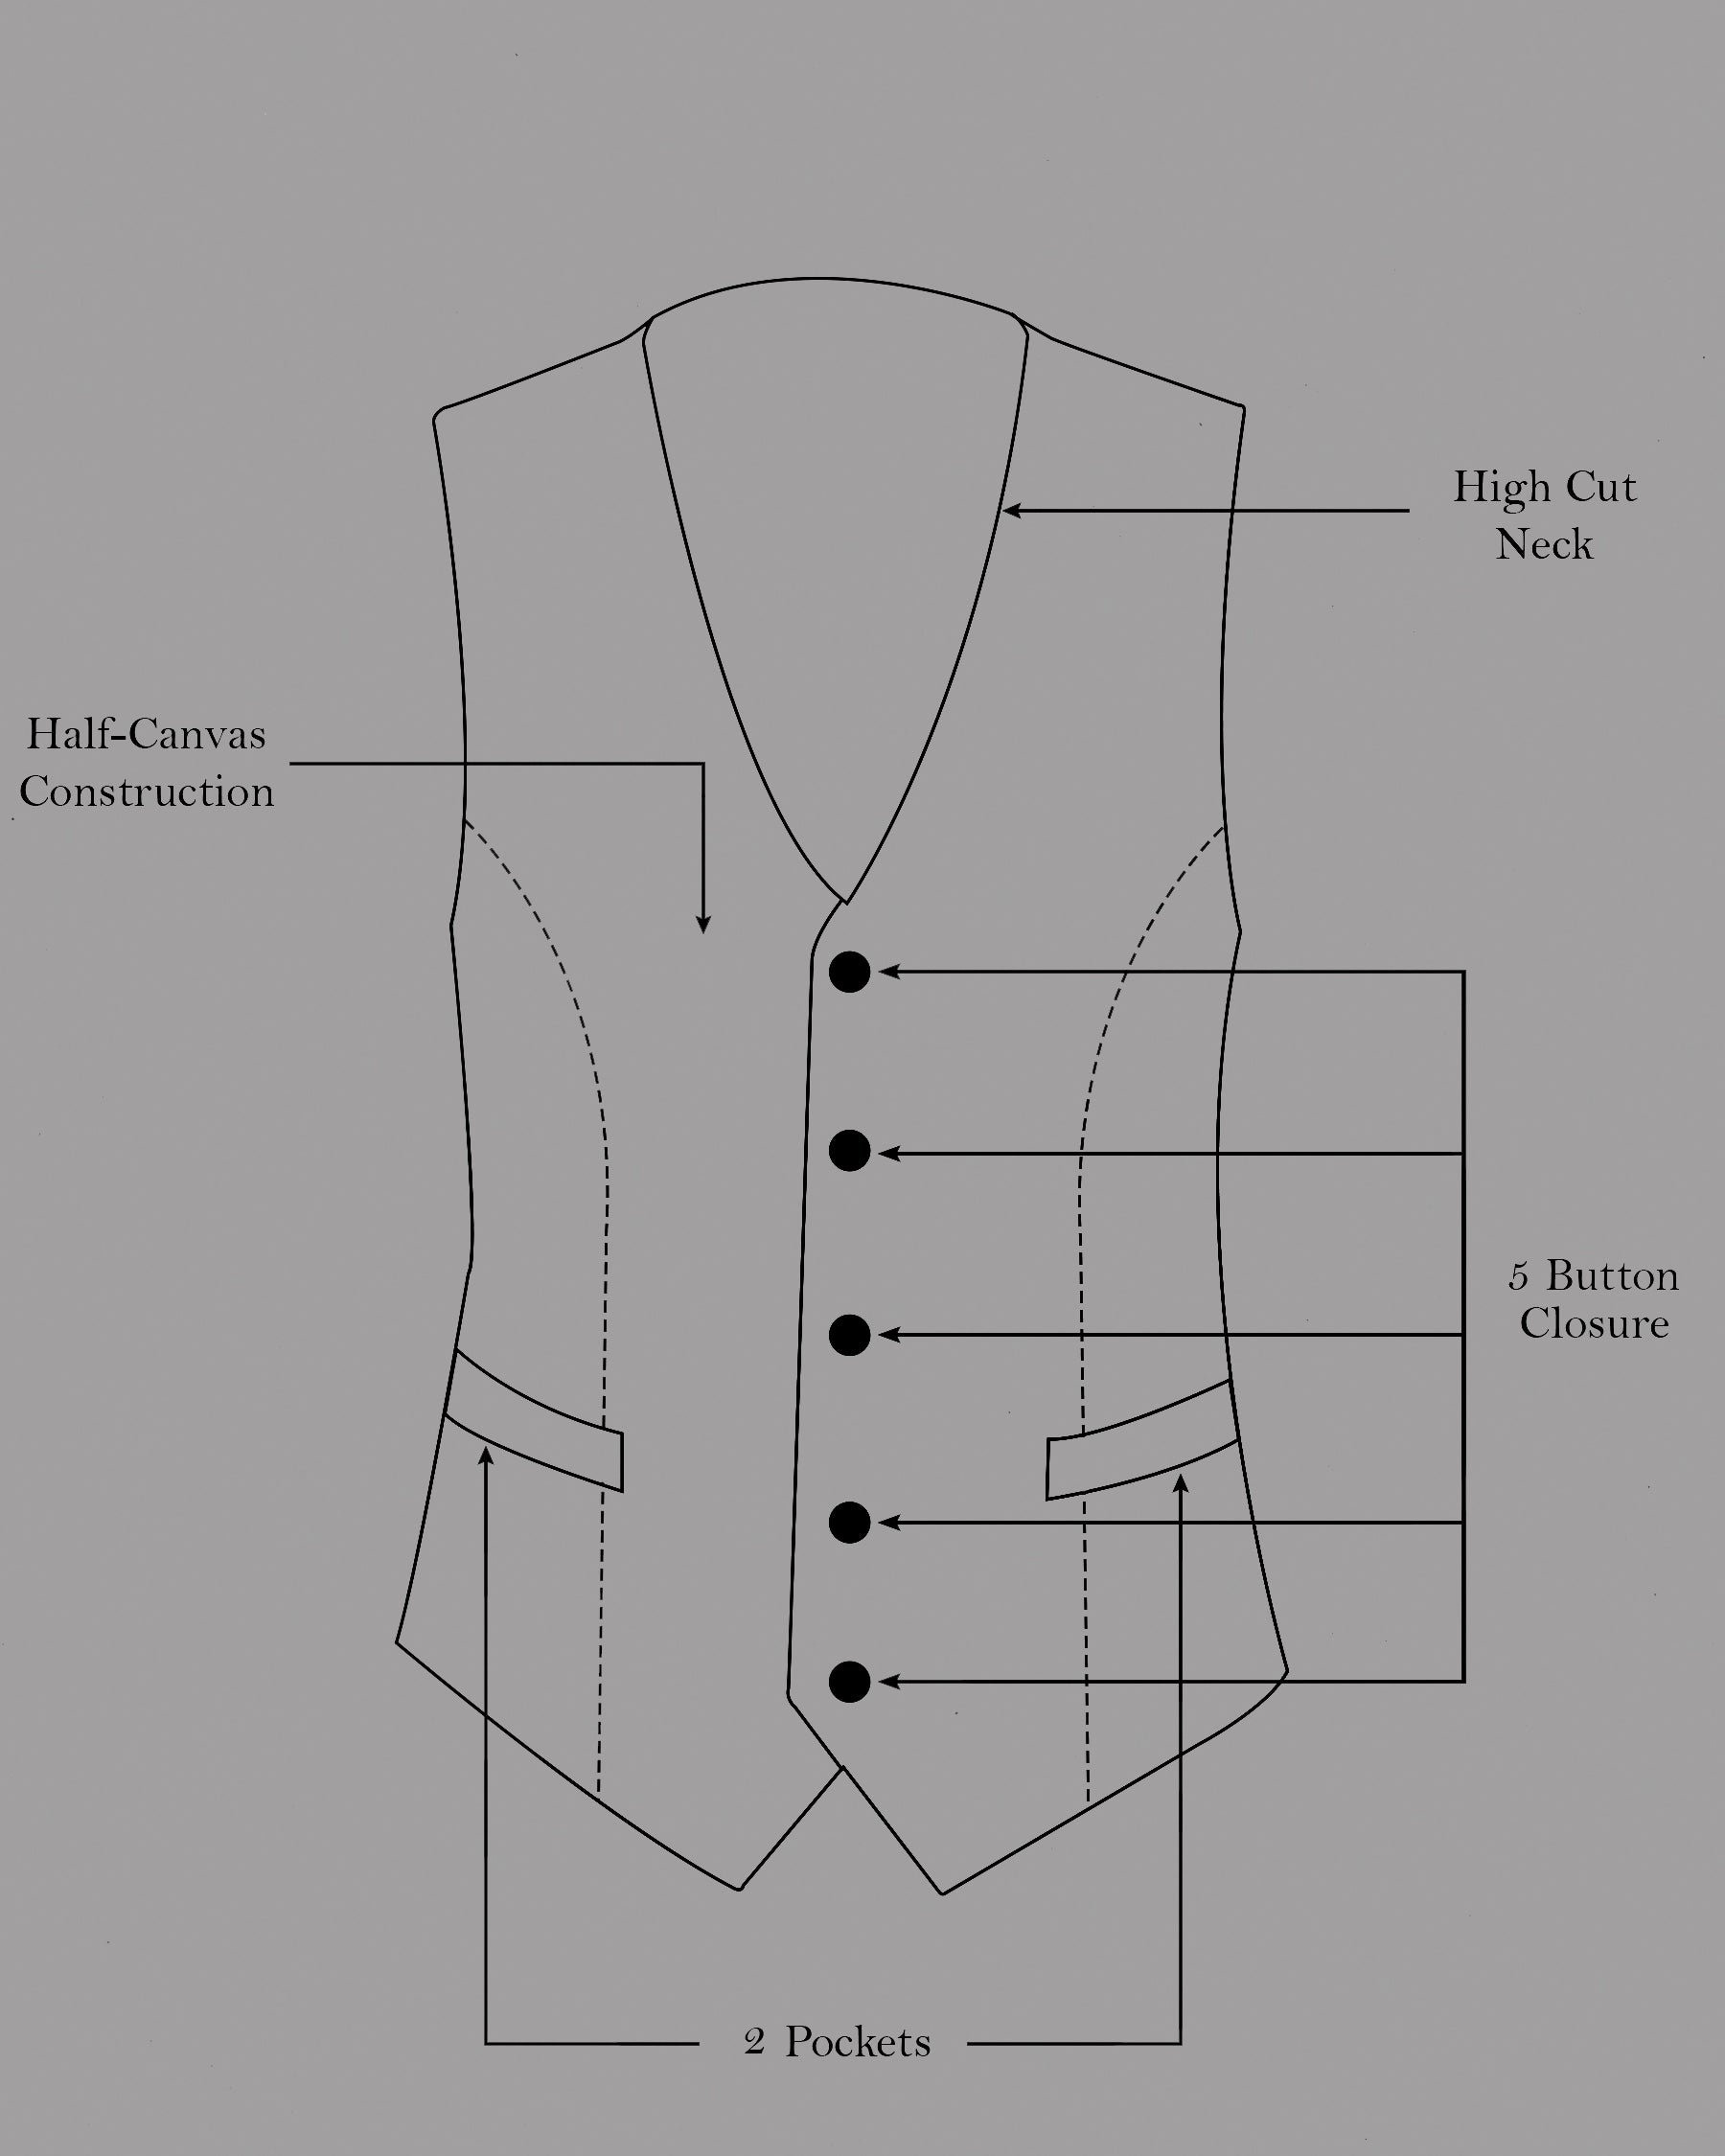 Martini Gray Stretchable Premium Cotton traveler Suit